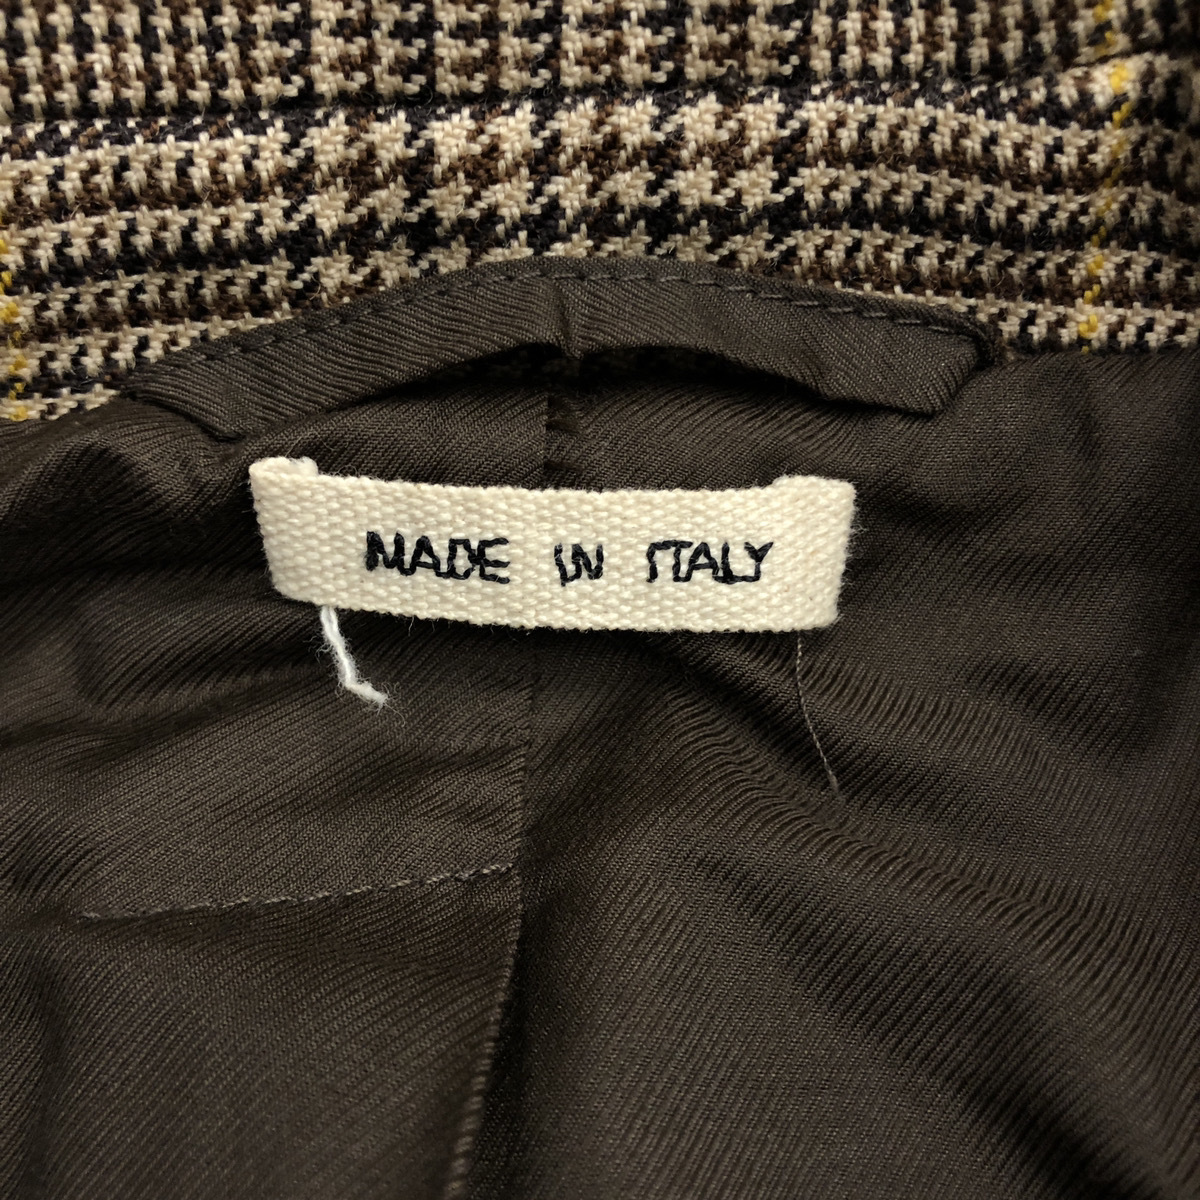 * MARNI Marni 19AW CHECK LONG COAT check long coat outer jacket Italy made size 44 Brown tea color 104